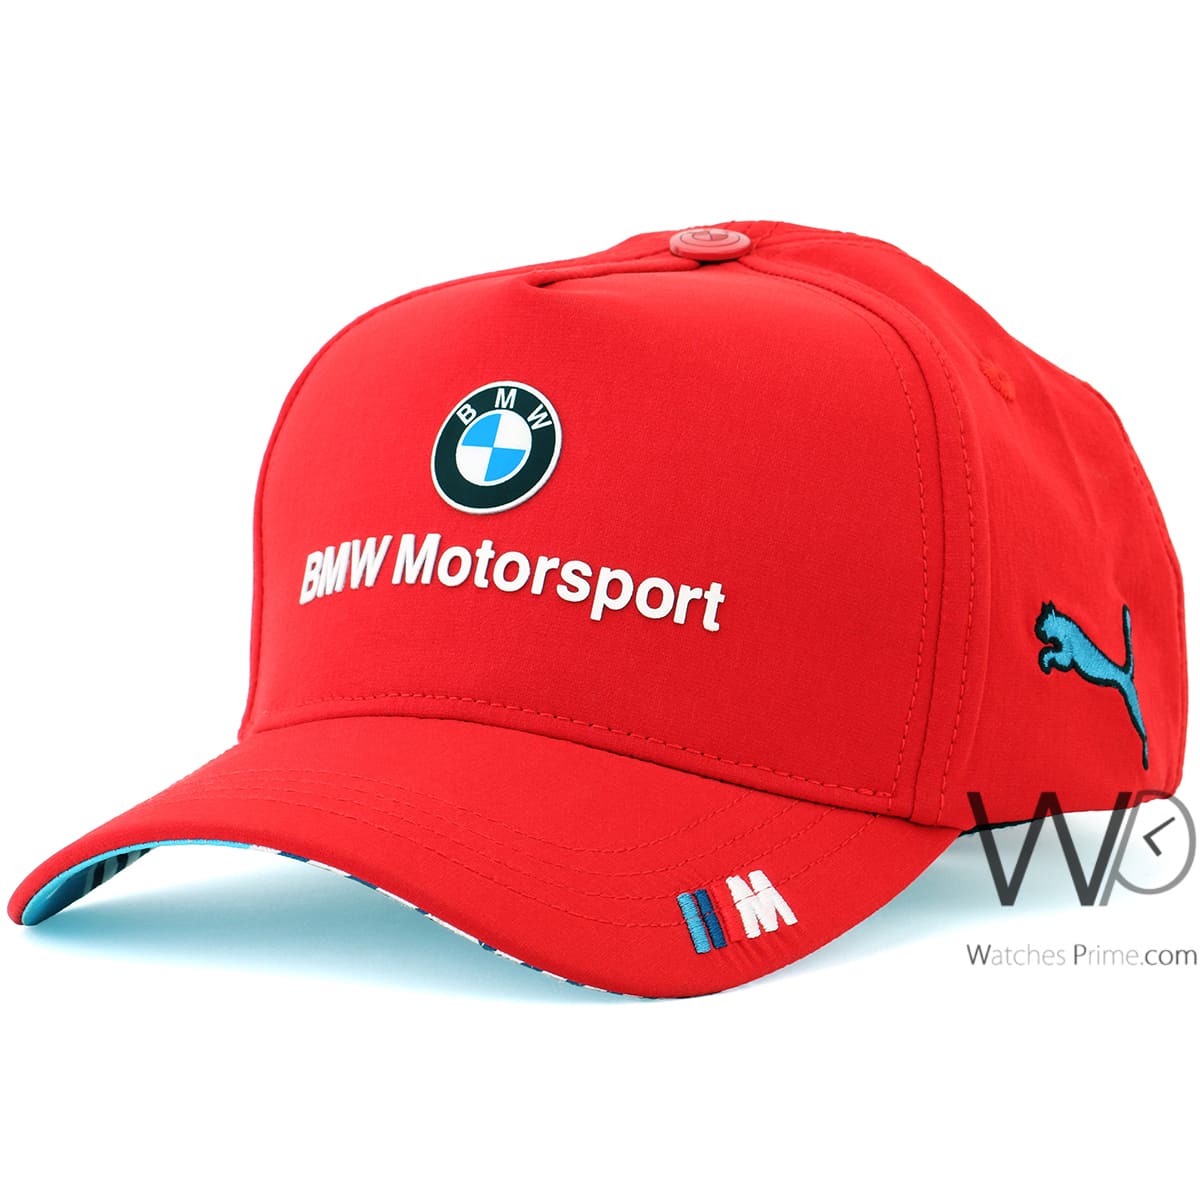 https://watchesprime.com/wp-content/uploads/2021/07/baseball-hat-puma-bmw-m-motorsport-red-cap-men.jpg